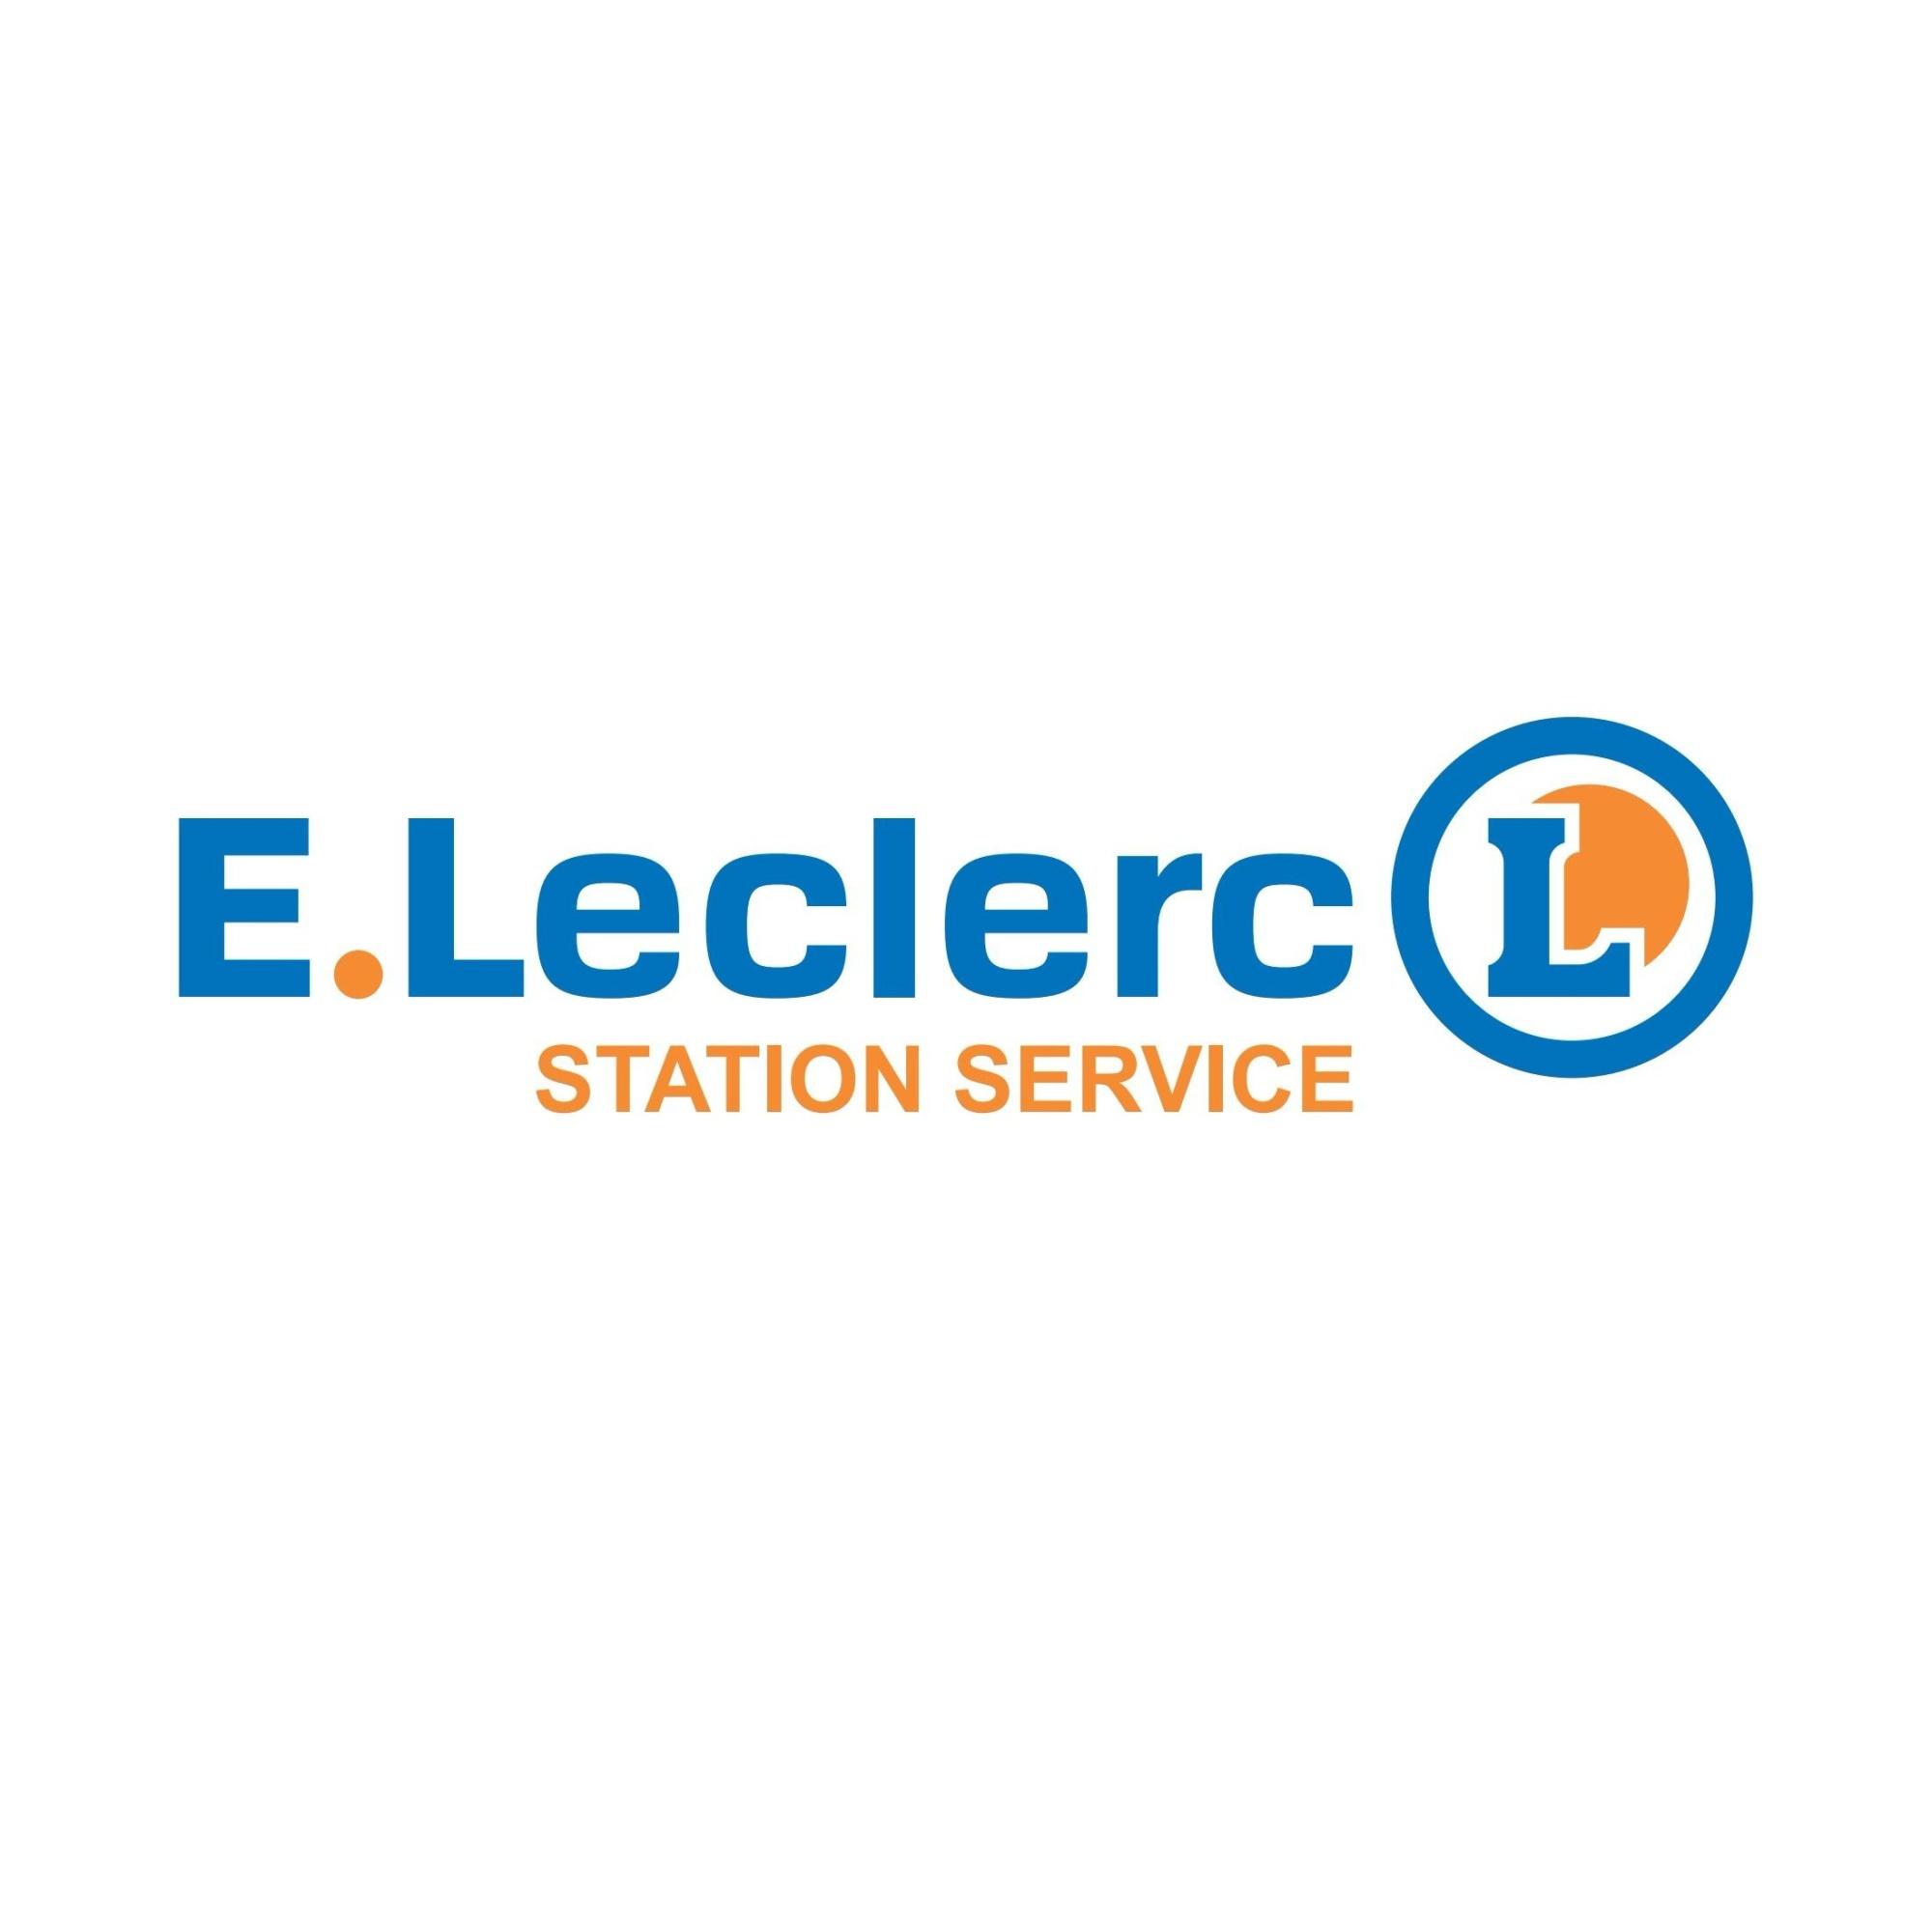 E.leclerc Station Service Amboise